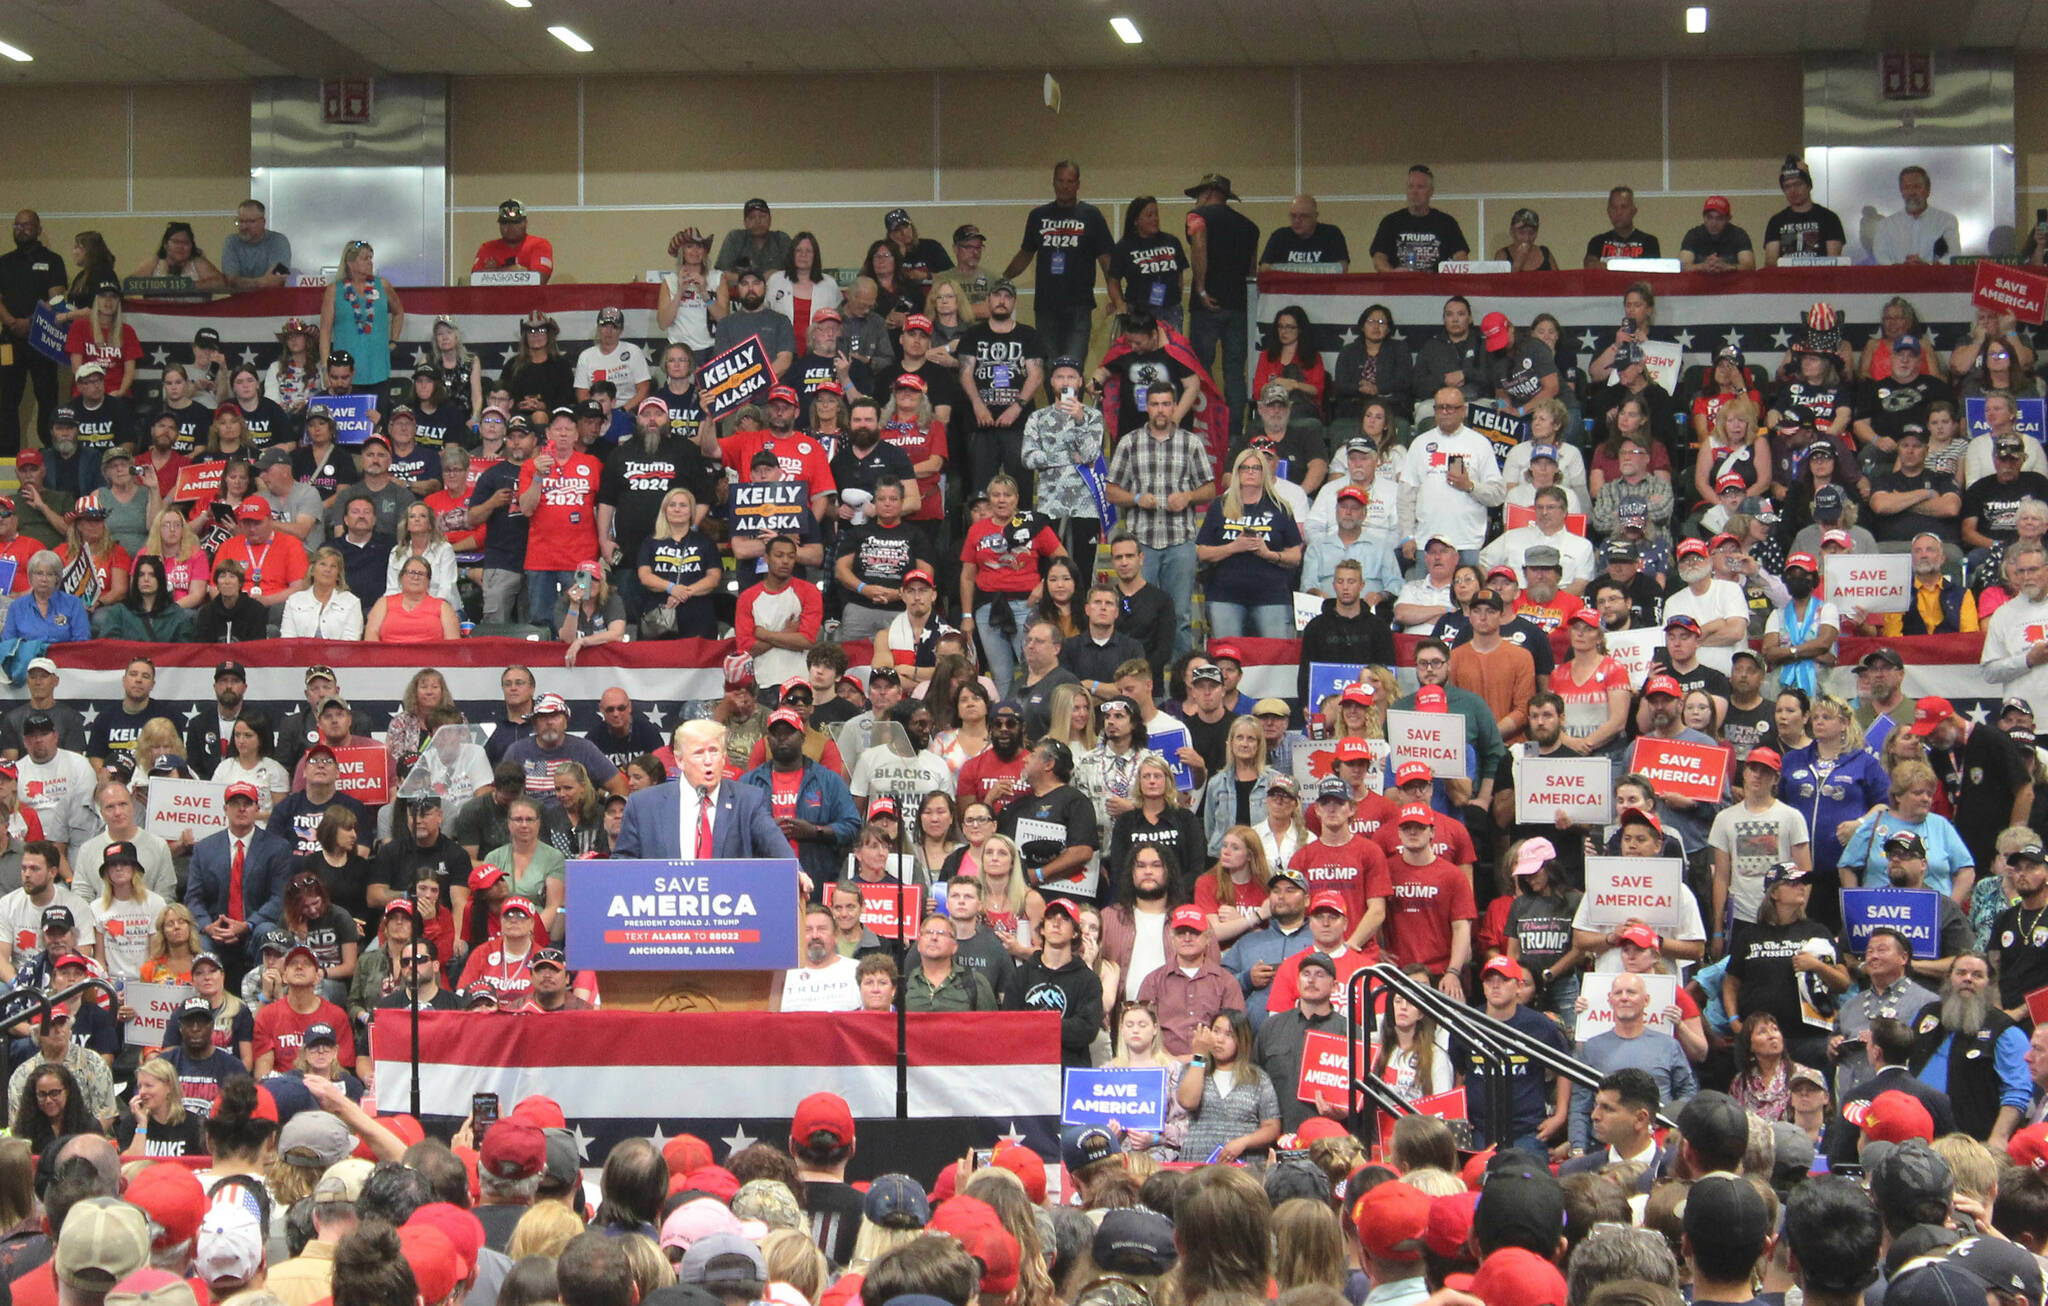 Donald Trump addresses attendees at a Save America rally on Saturday, July 9, 2022, in Anchorage, Alaska. (Ashlyn O’Hara/Peninsula Clarion)